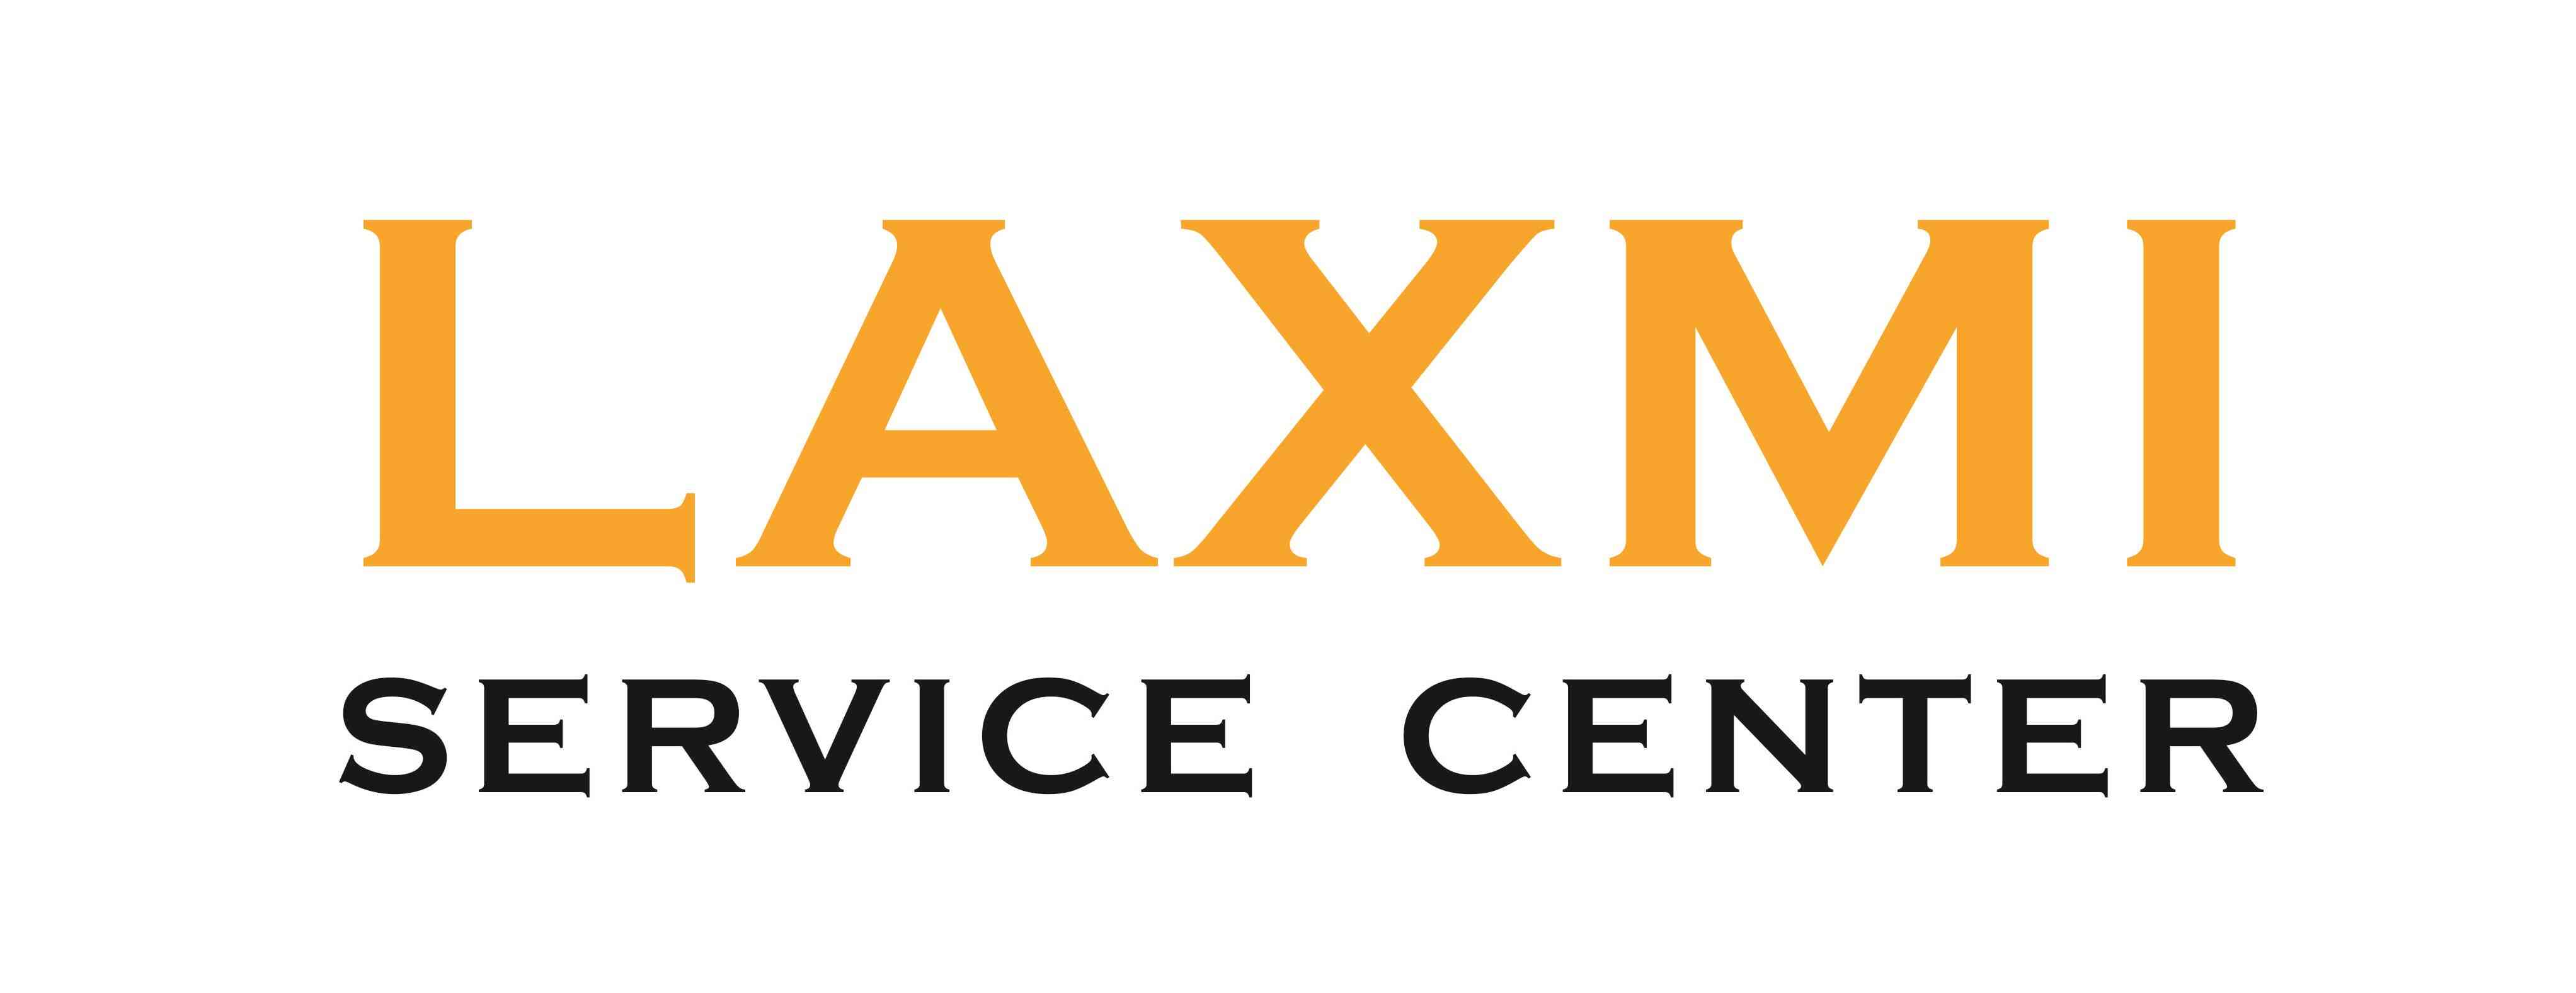 Laxmi Group India Logo